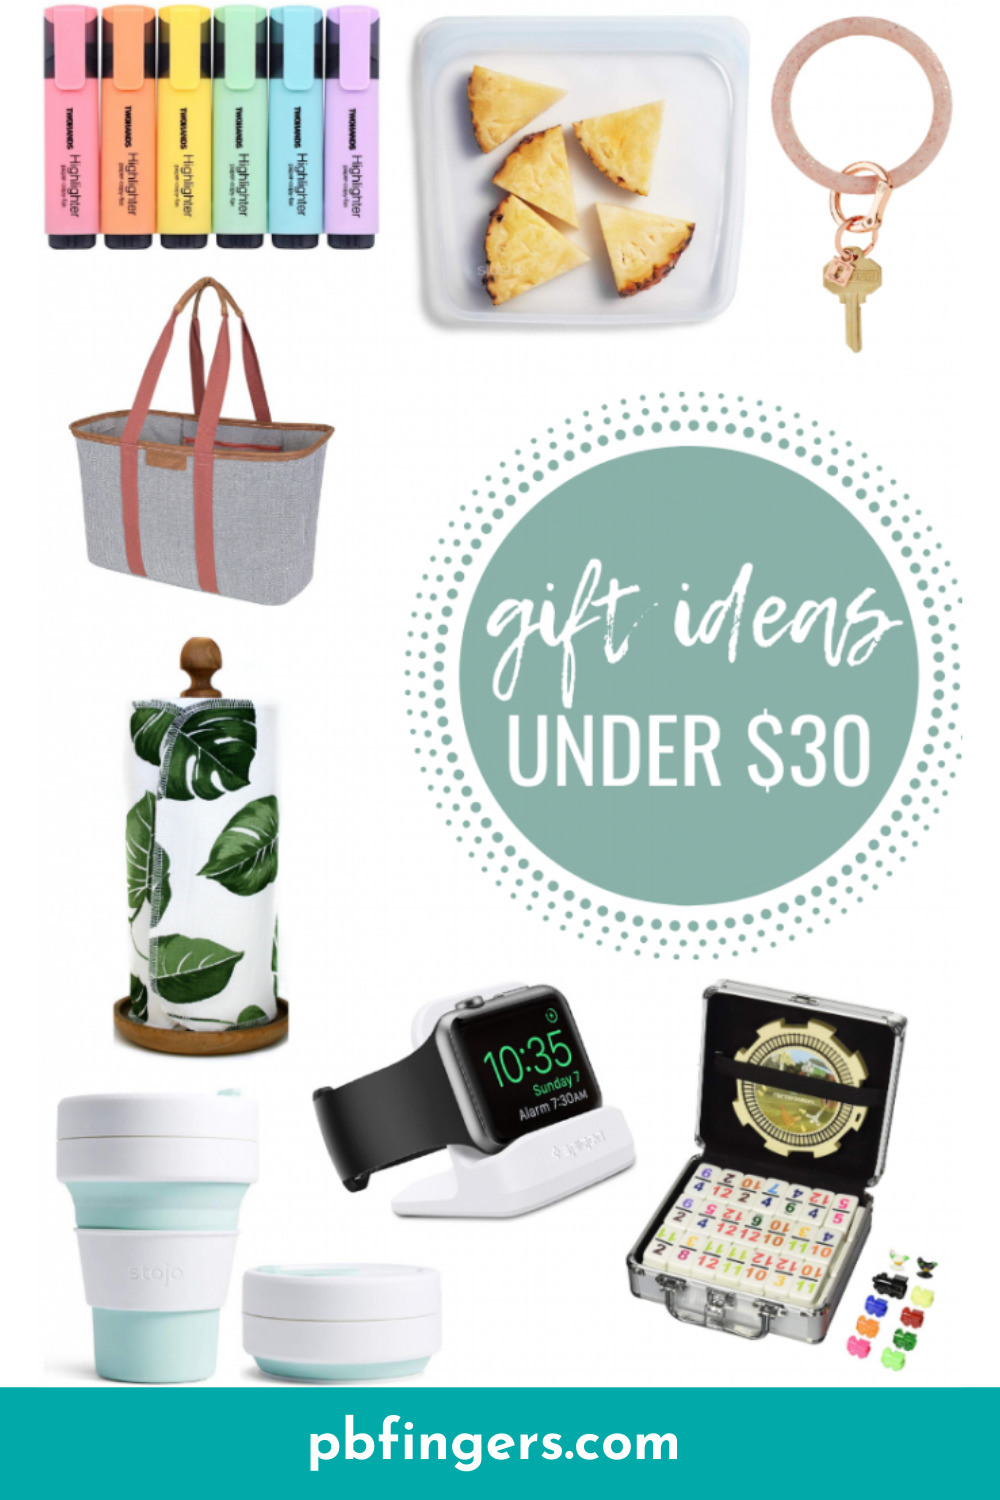 Gift Ideas for Women Under $30!